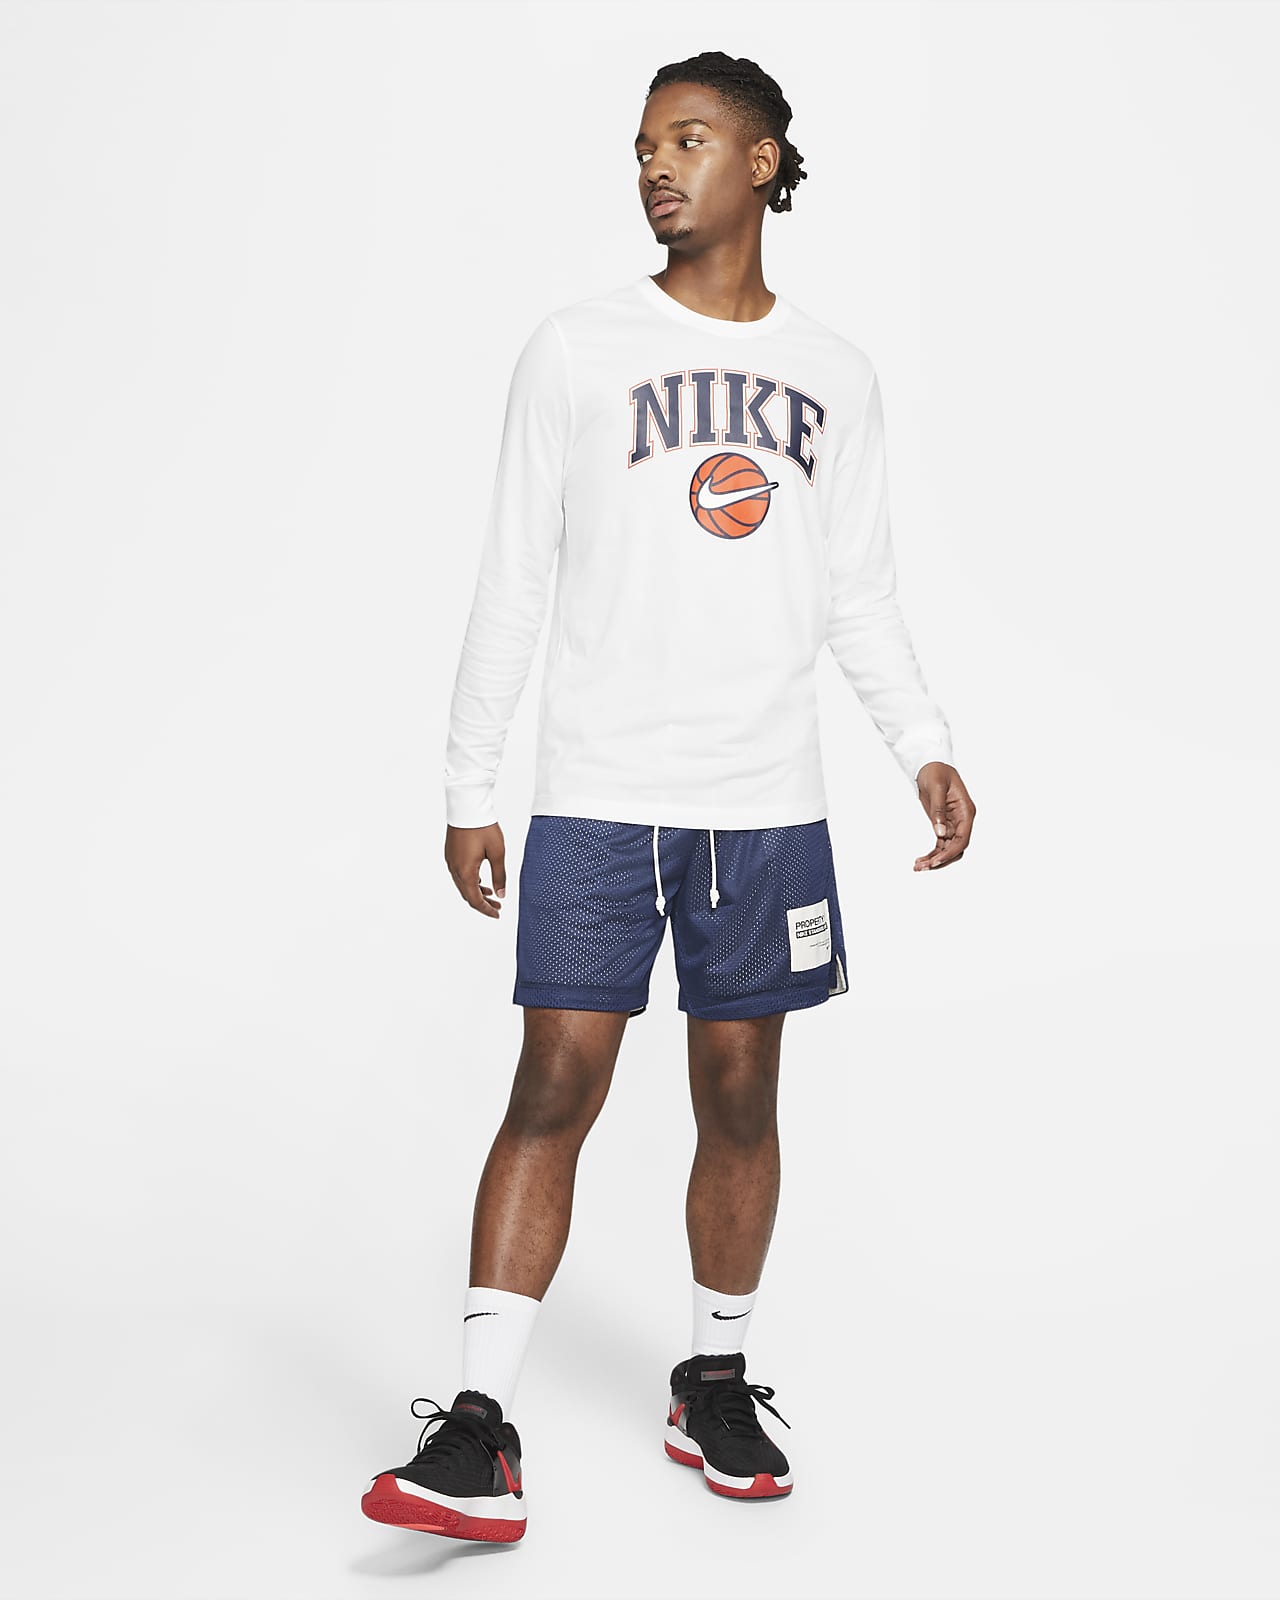 Download Nike Standard Issue Men's Basketball Reversible Shorts ...